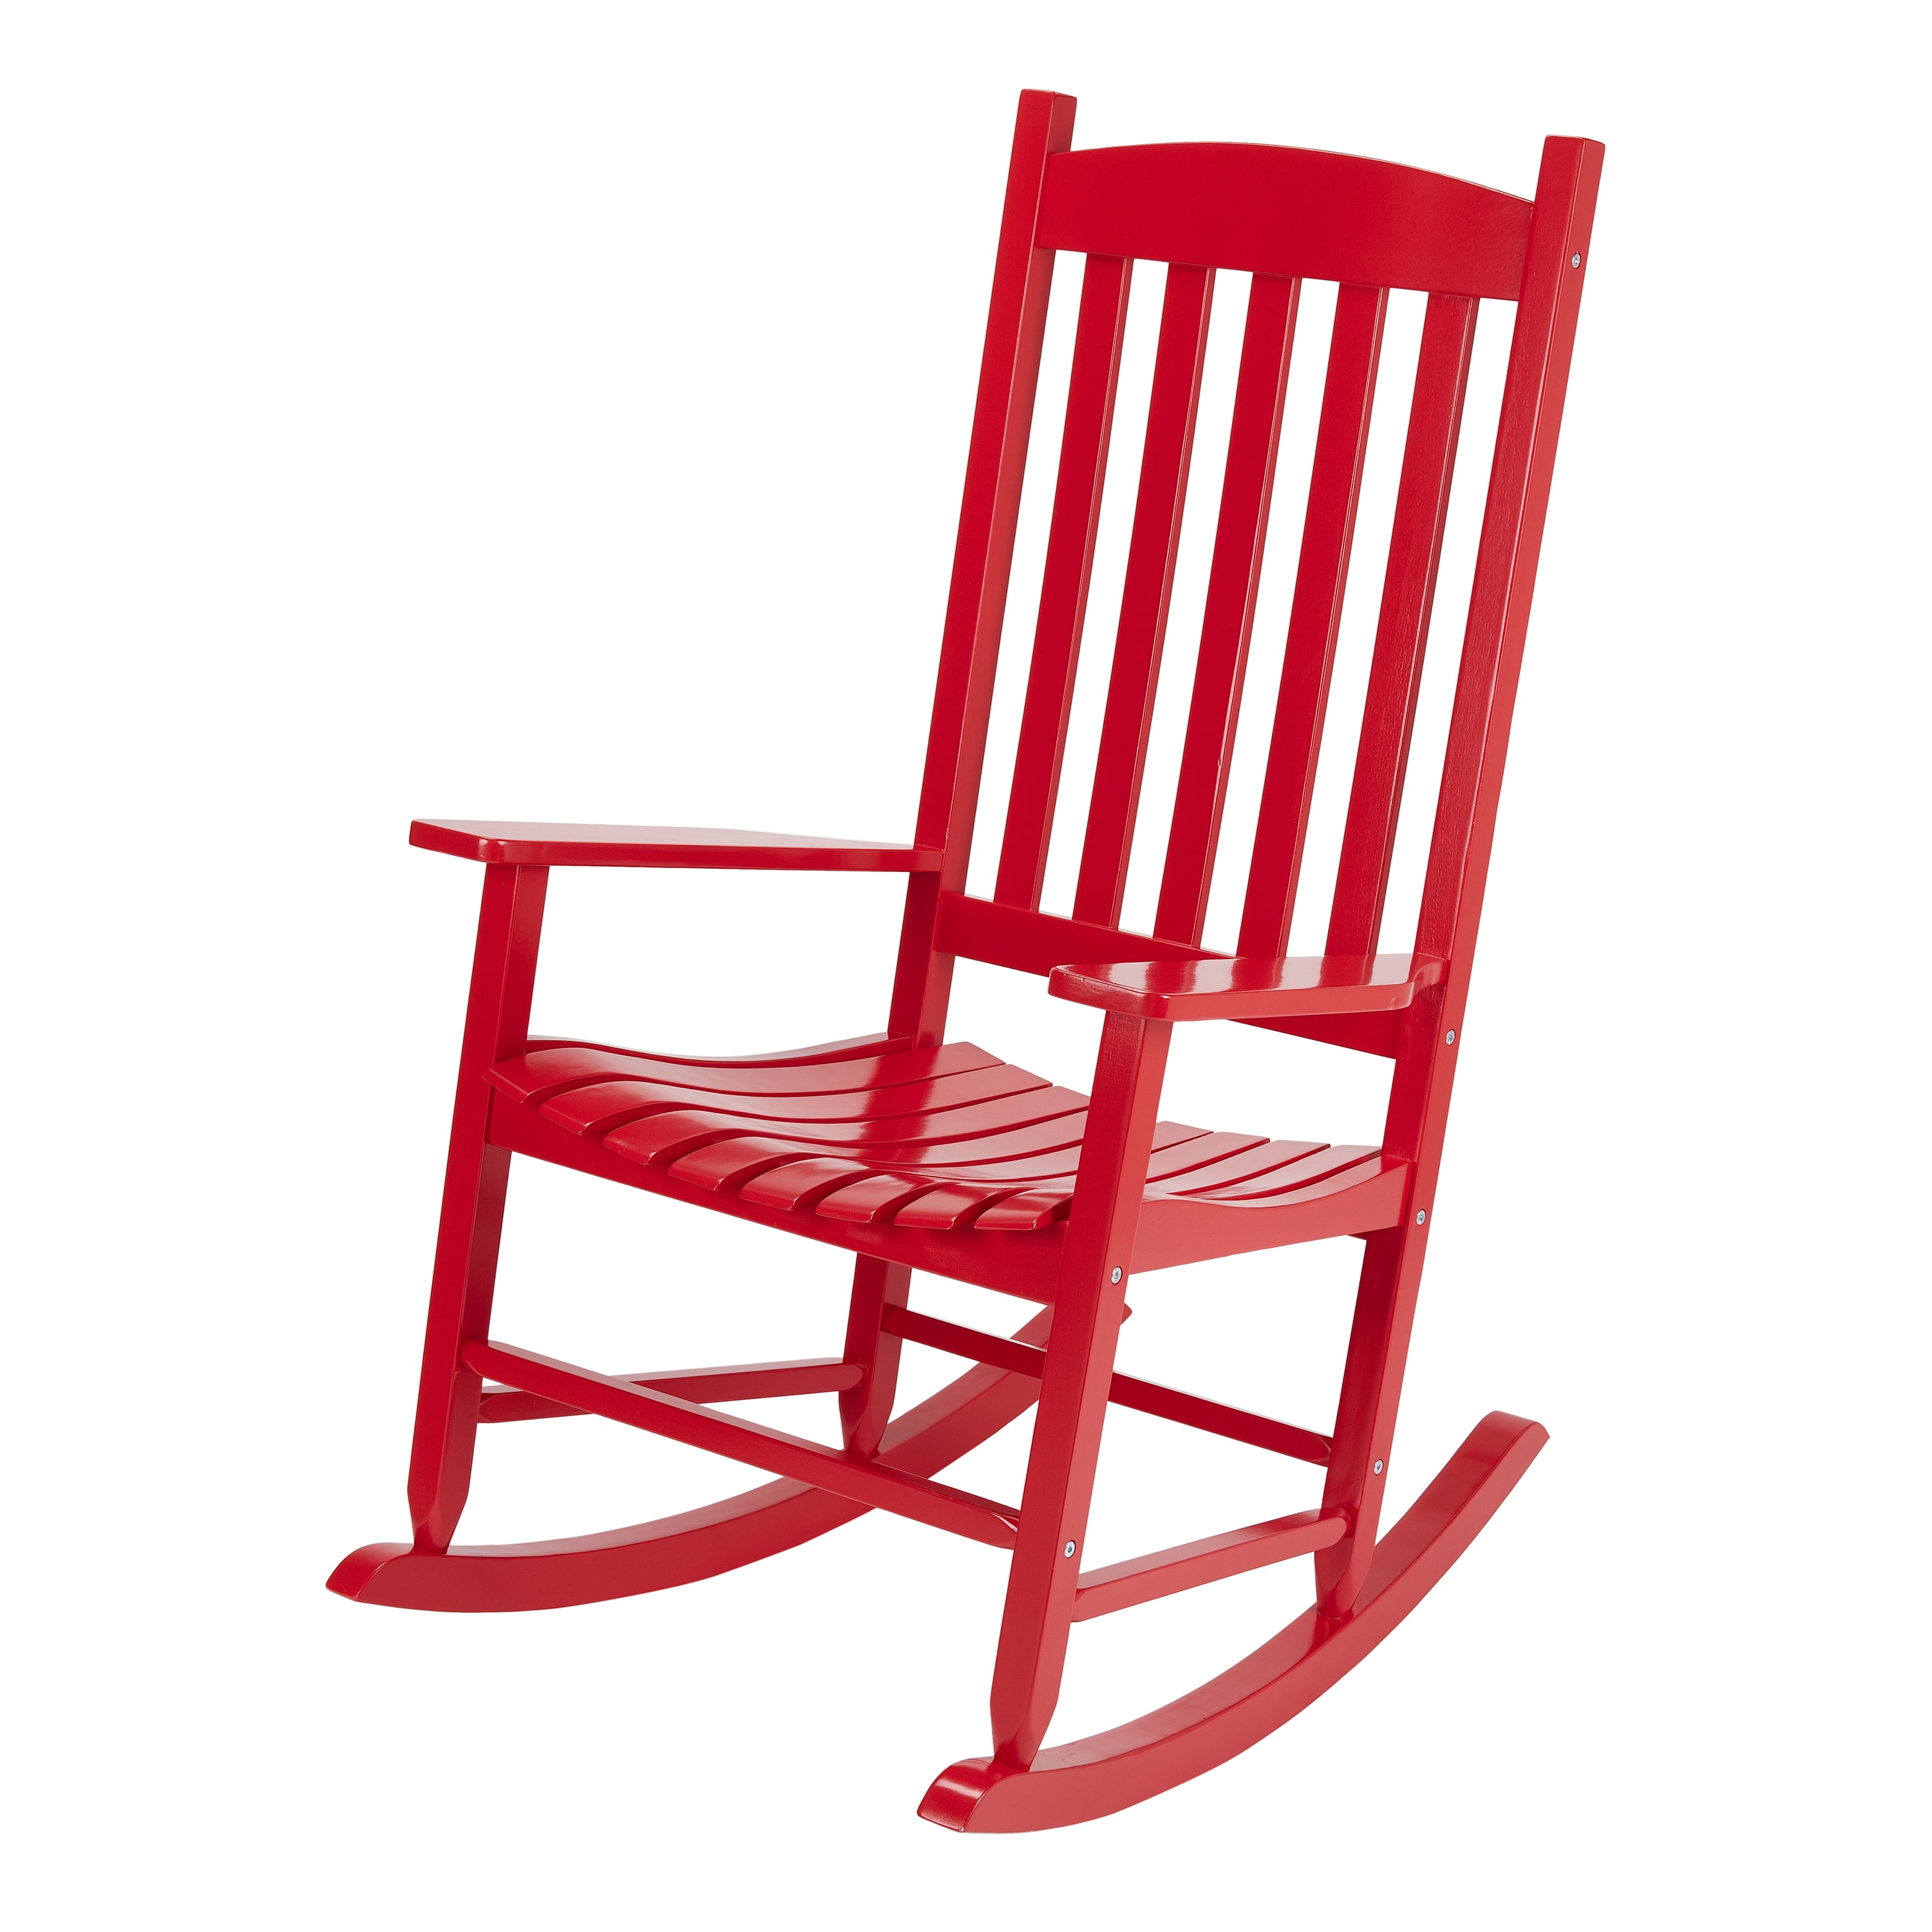 Mainstays Outdoor Wood Slat Rocking Chair, Red - Walmart.com -
Walmart.com